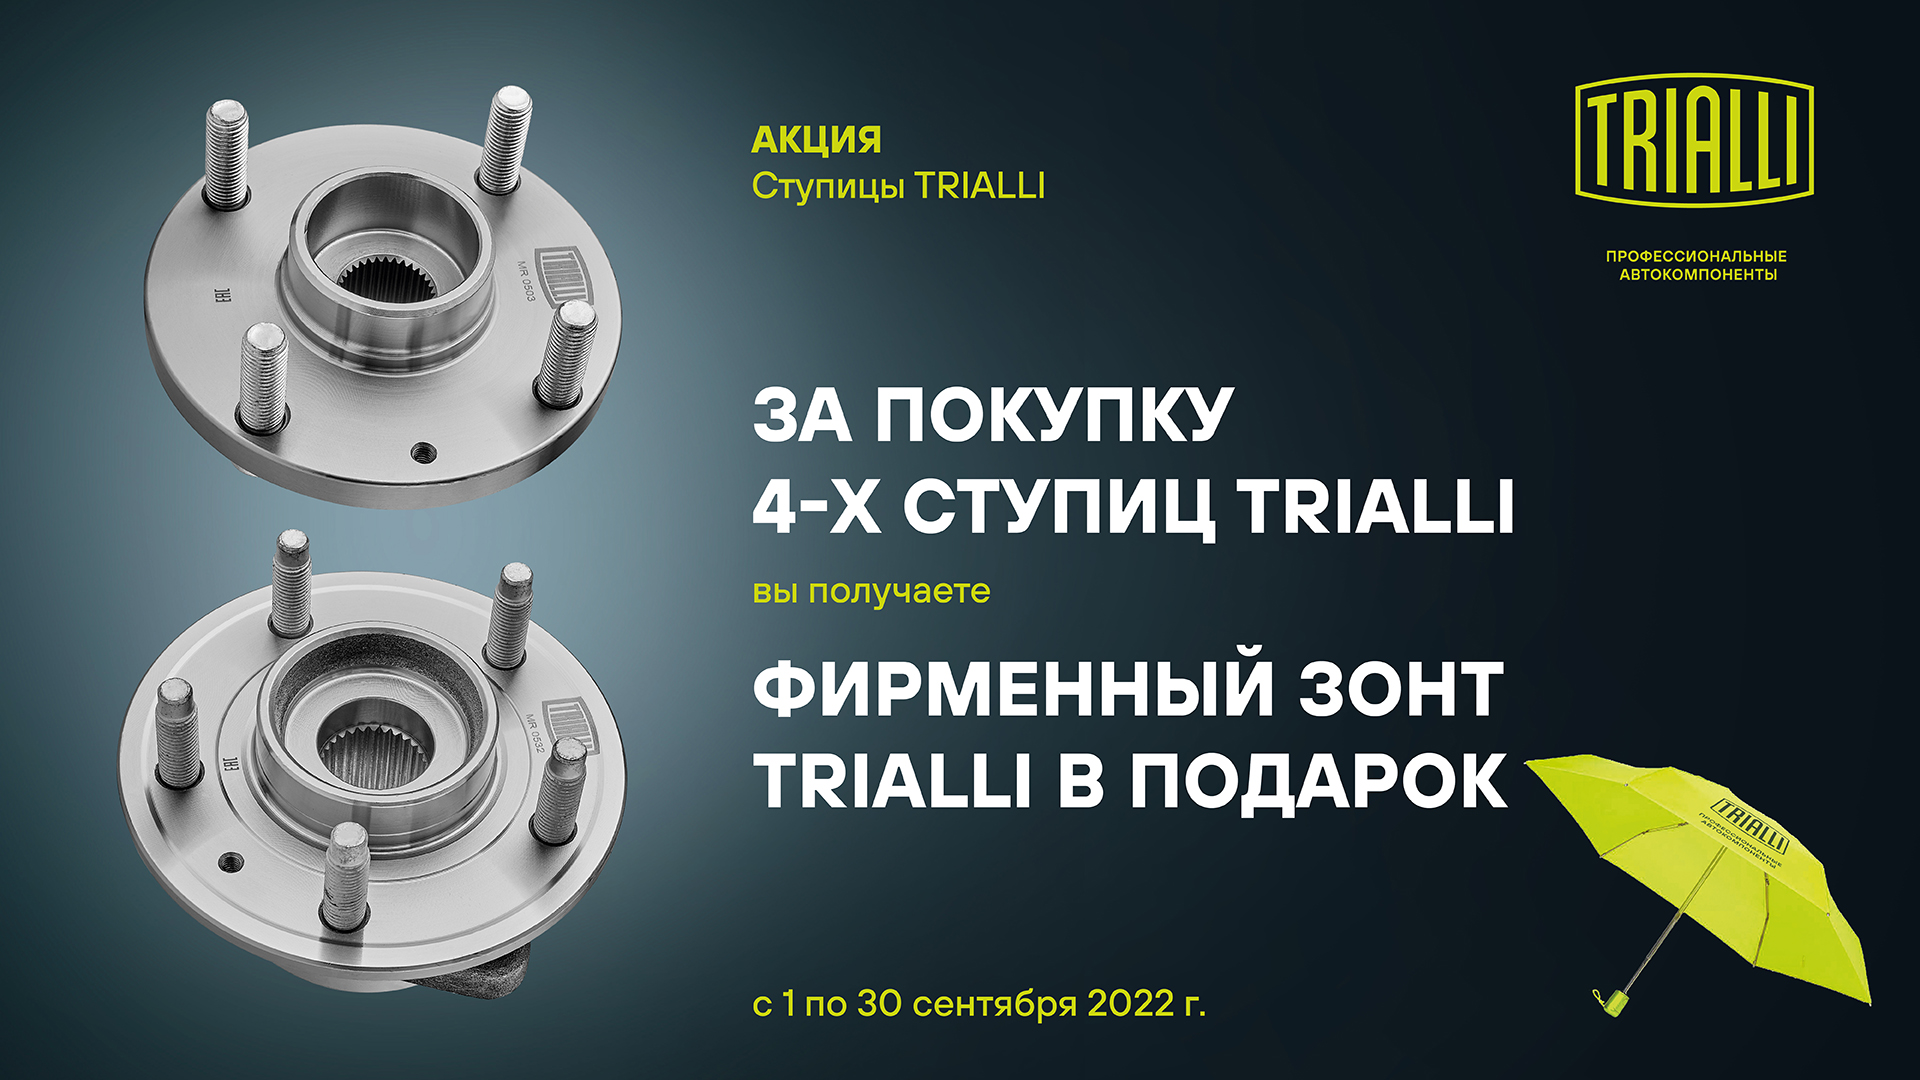 Trialli - подарок за покупку! Сентябрь 2022